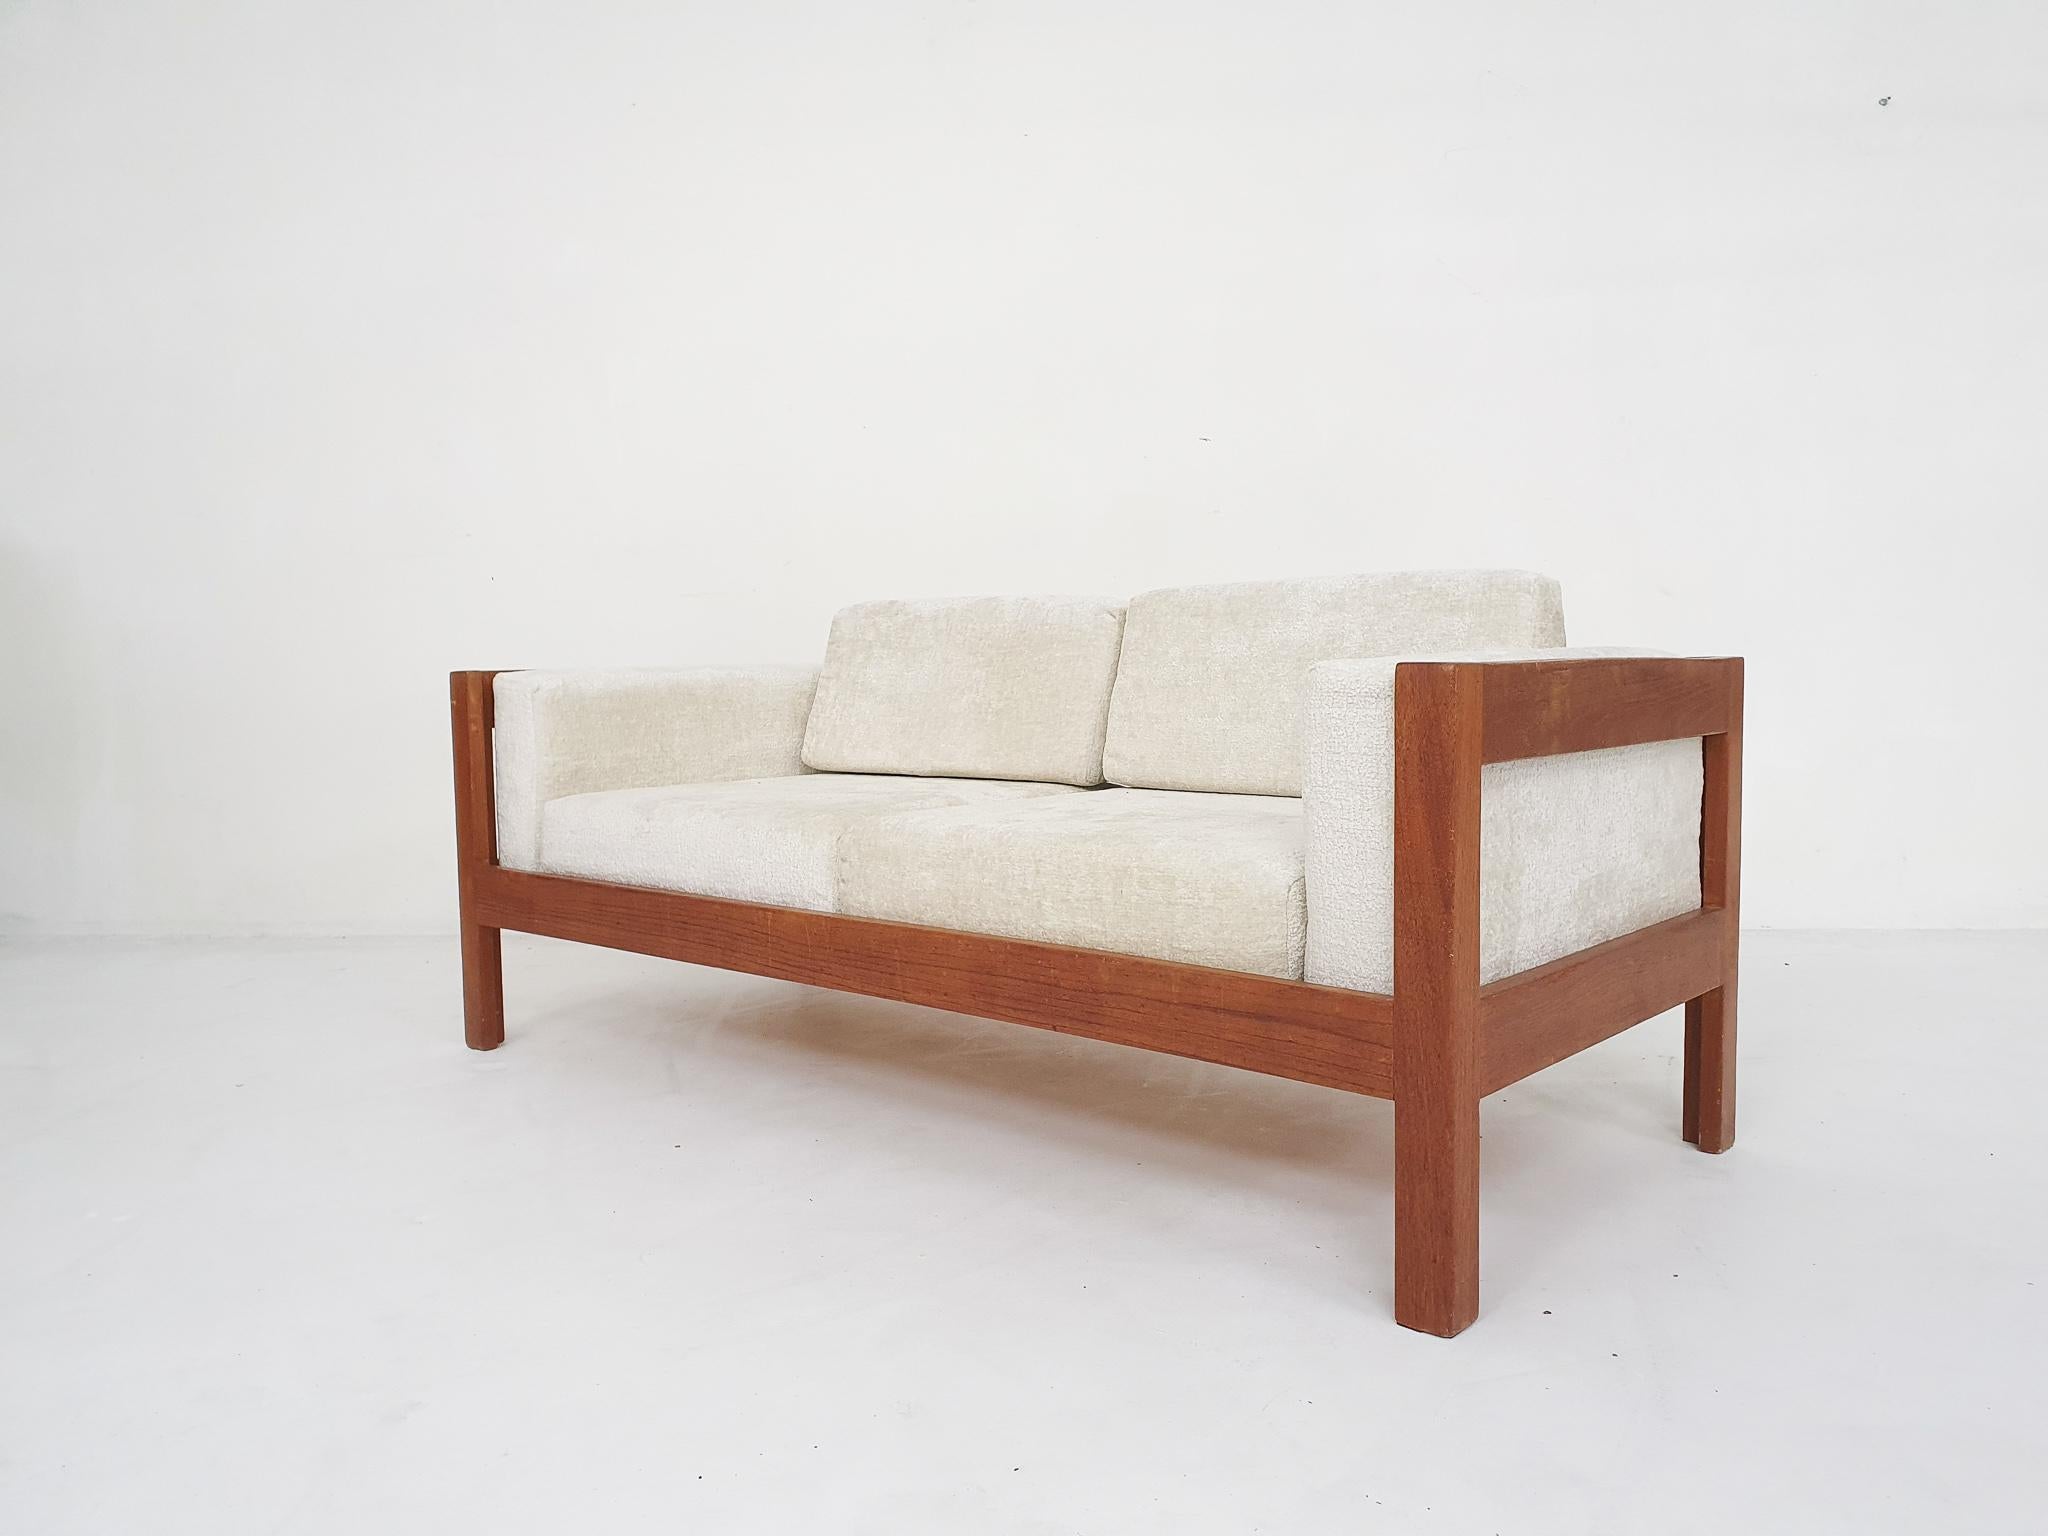 Skandinavisches modernes Sofa aus Teakholz und Bouclé, 1960er-Jahre (Skandinavische Moderne)